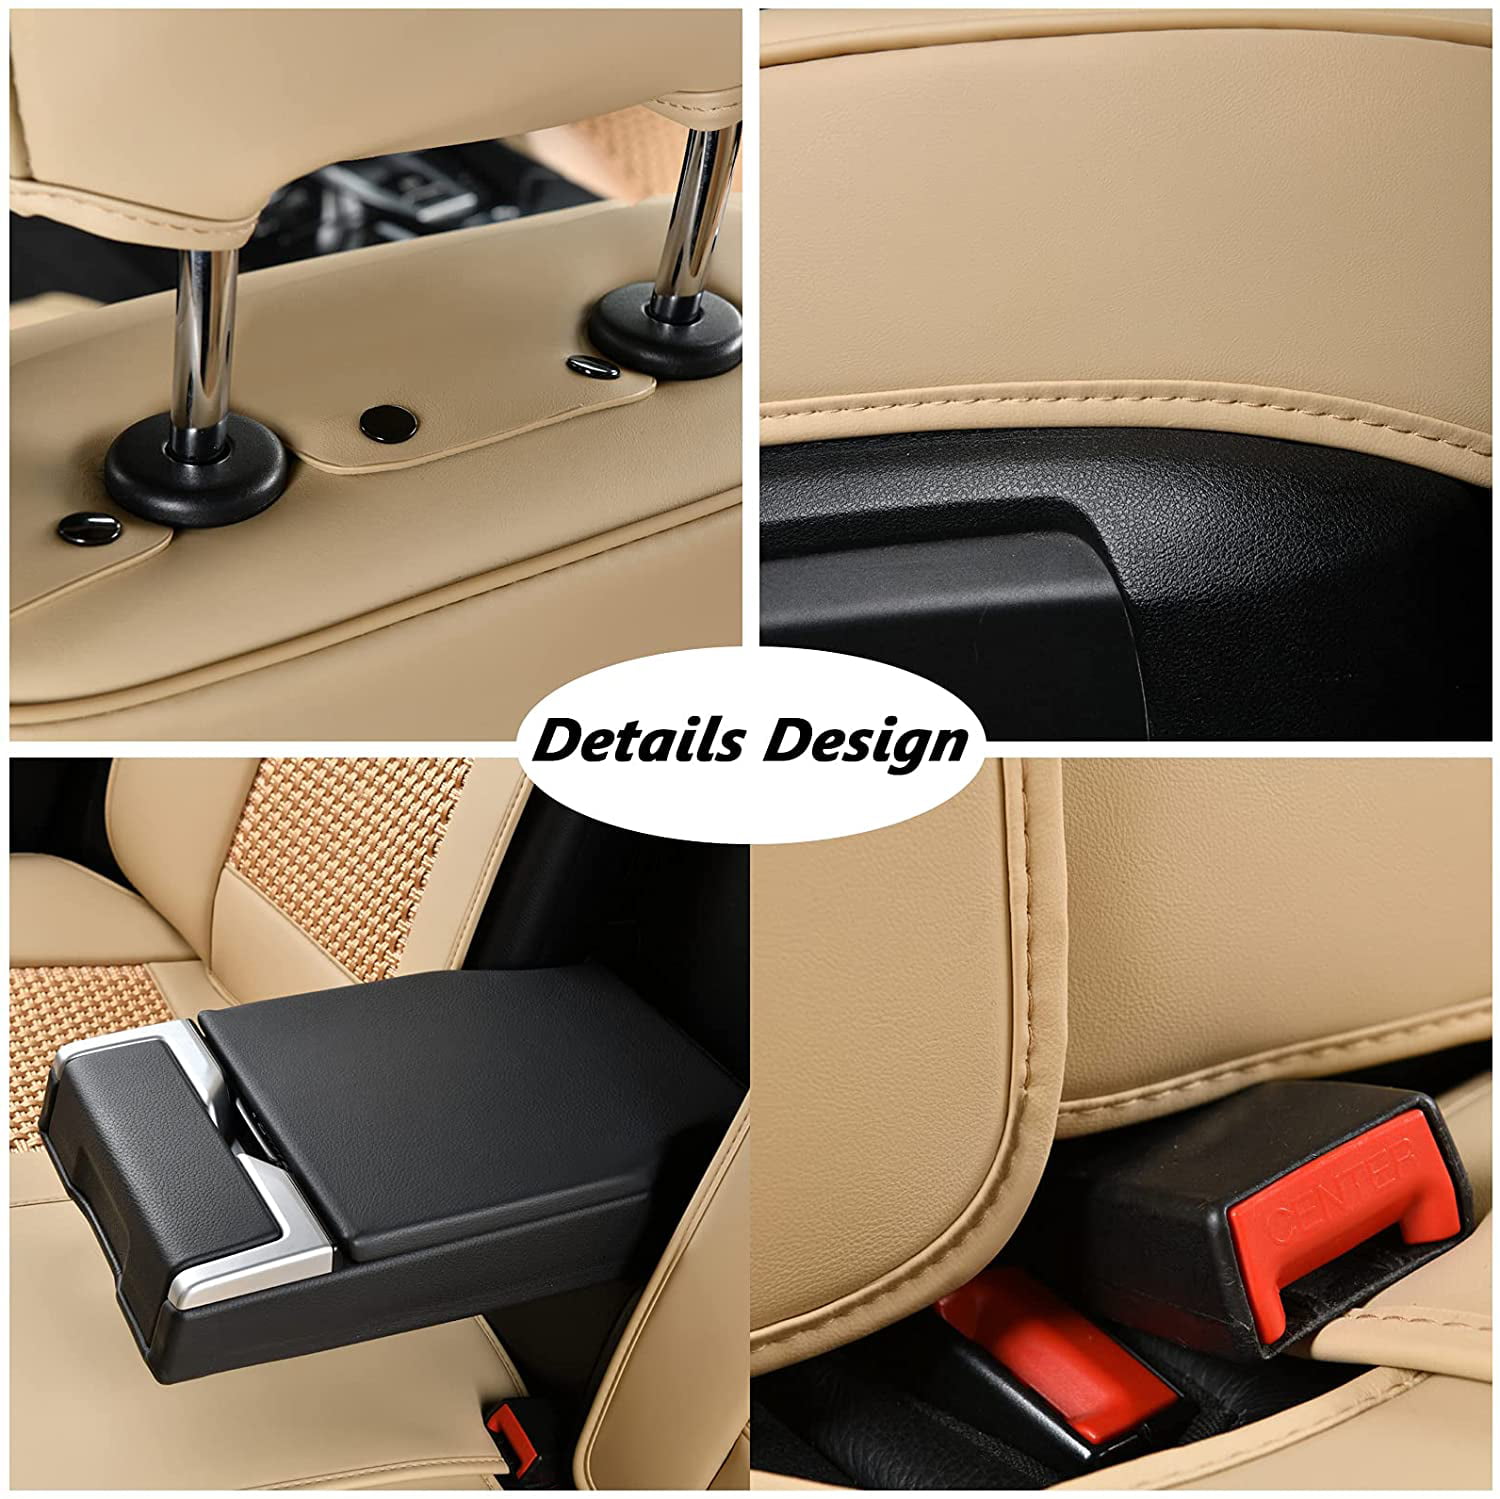 Seat Belt Extender for 2017 Chrysler 200 Front Seats E4 Safe 